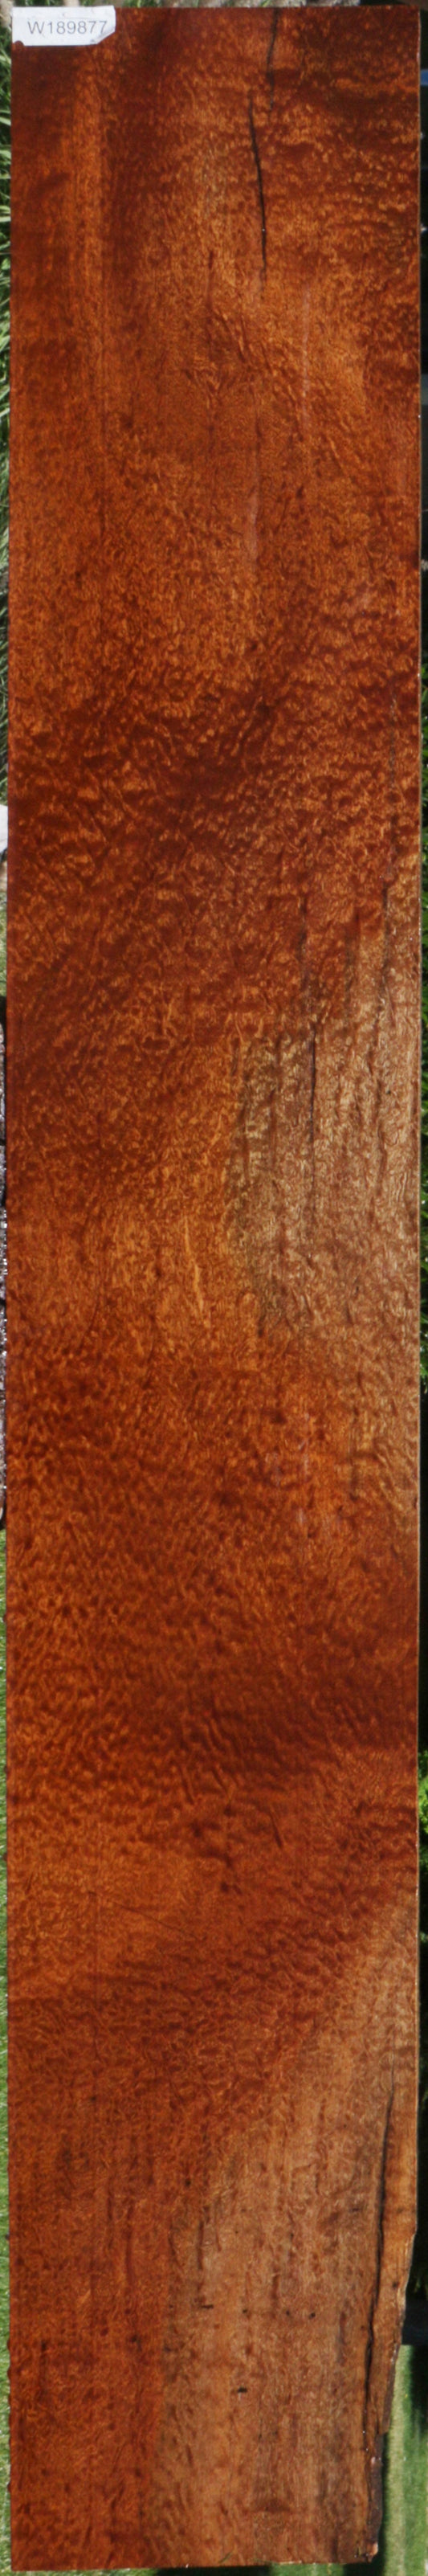 Exhibition Pomelle Sapele Lumber